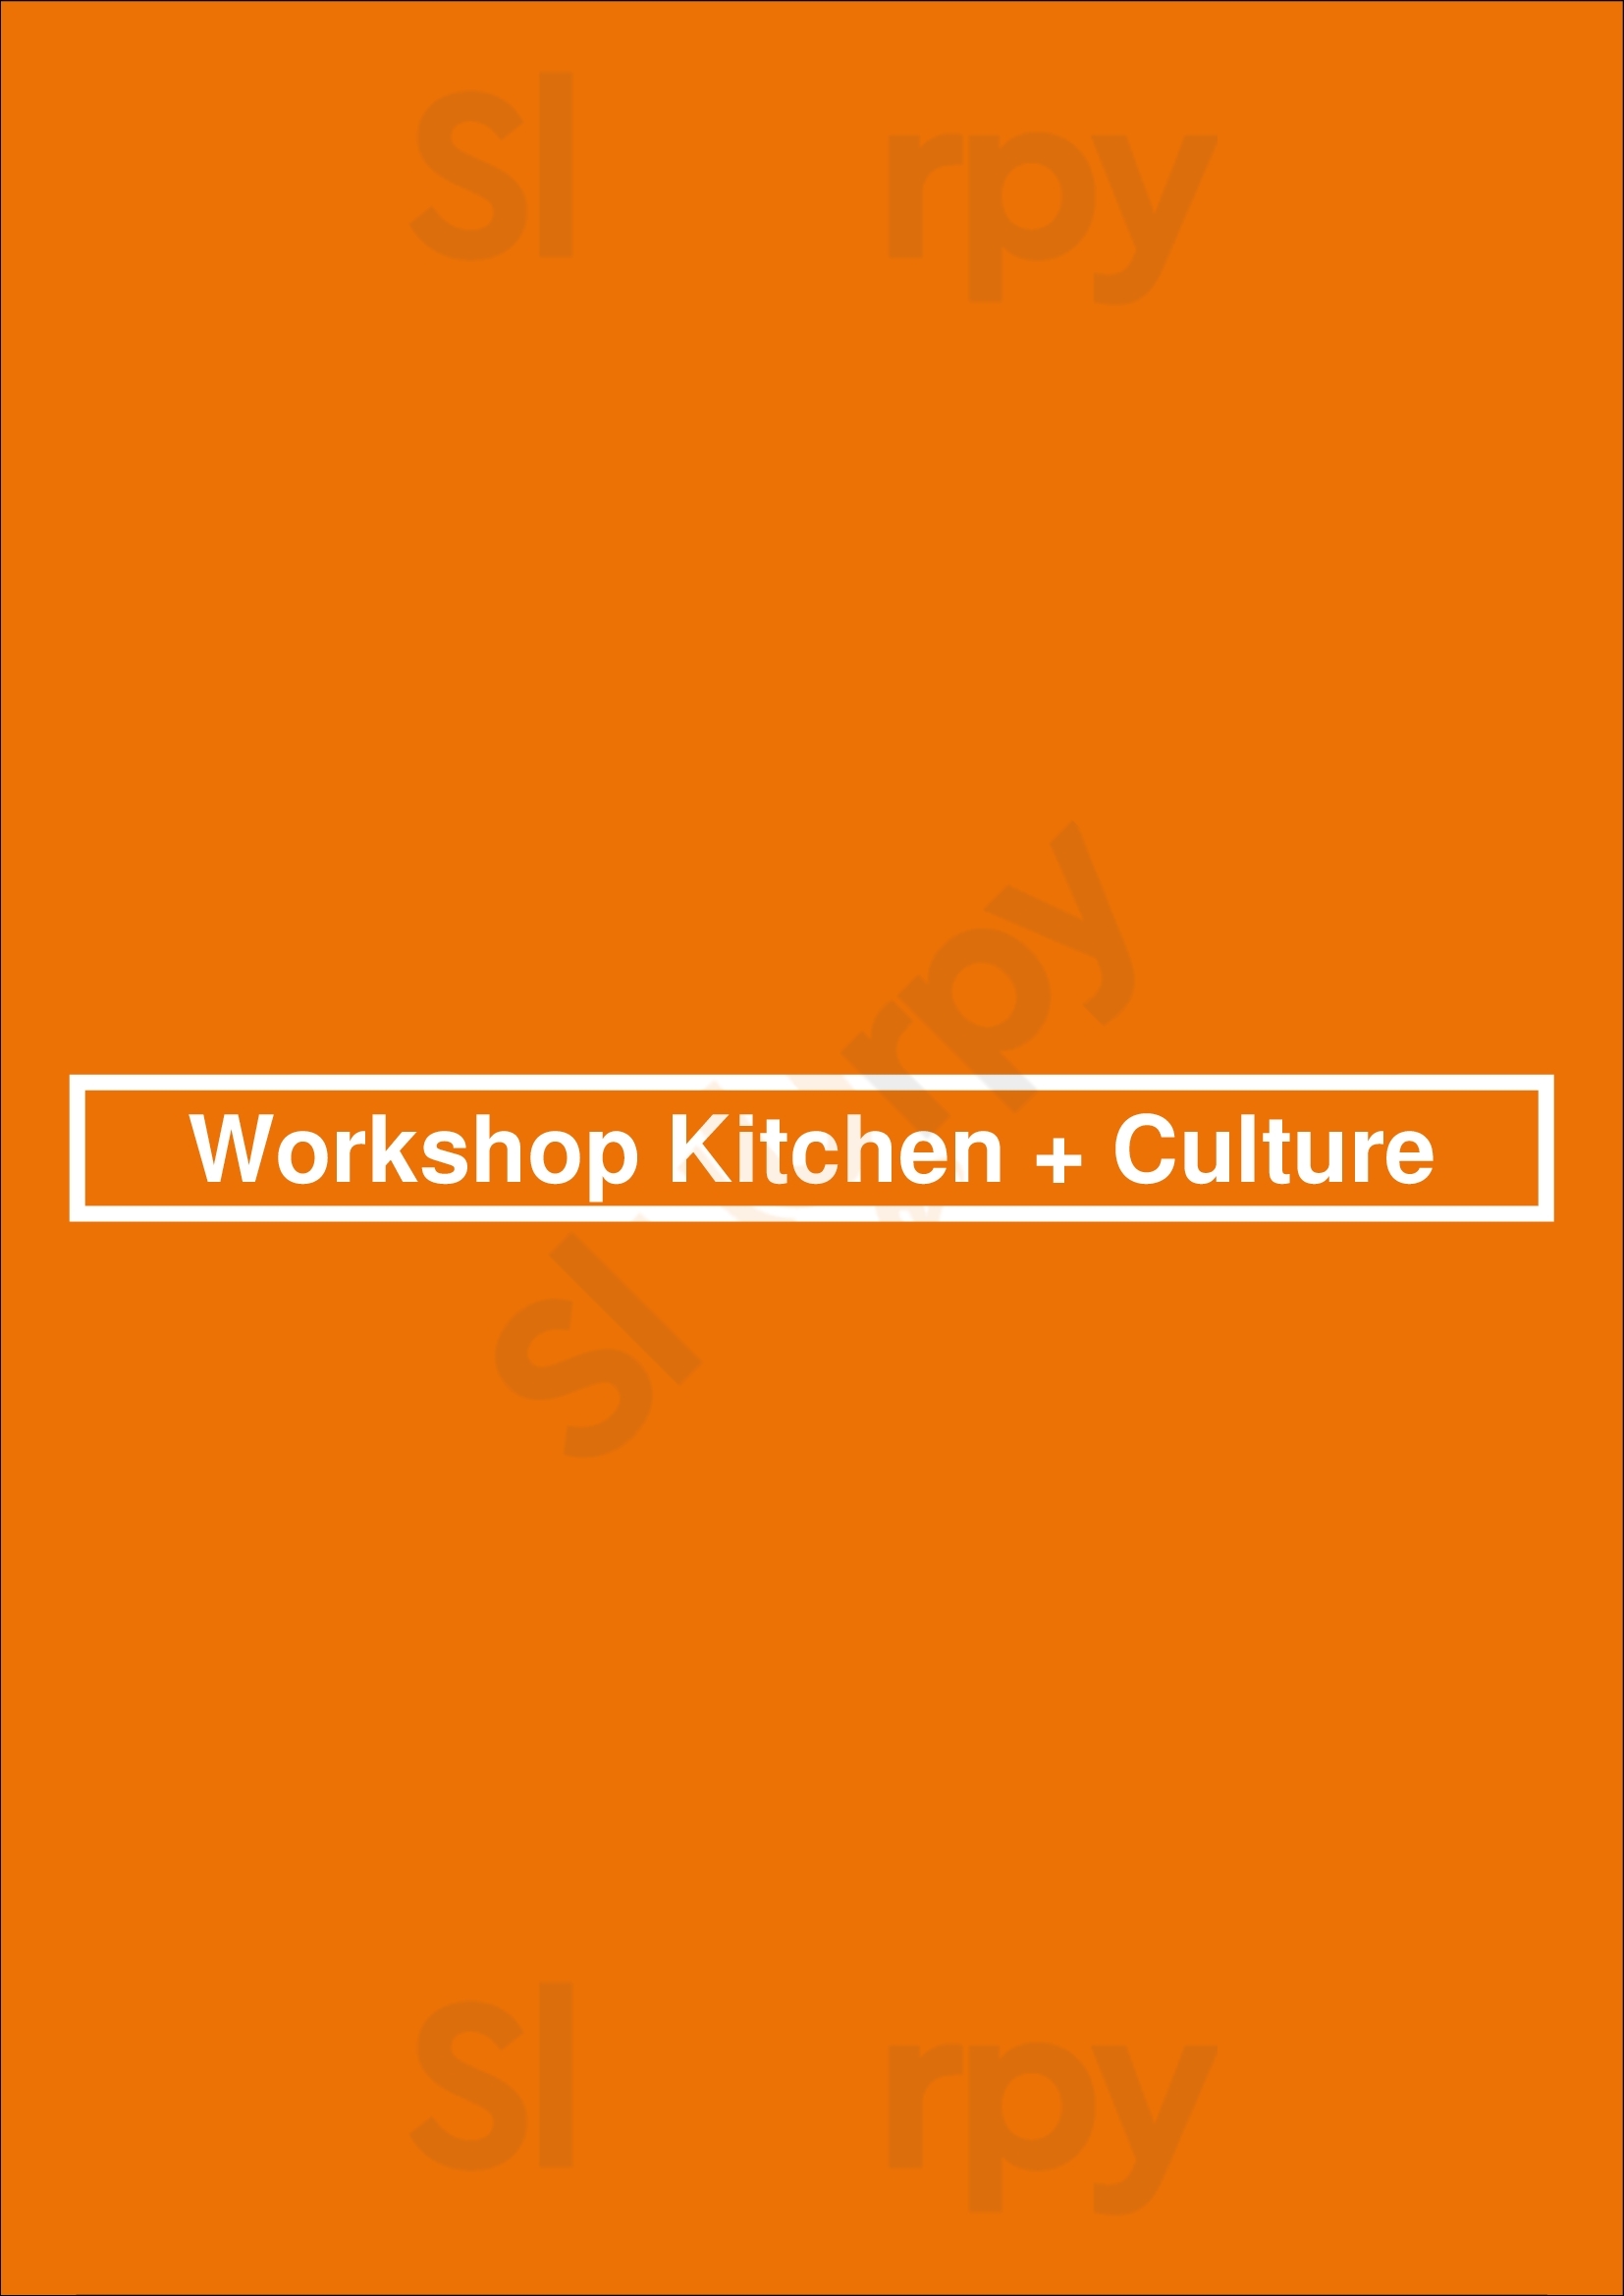 Workshop Kitchen + Culture Calgary Menu - 1